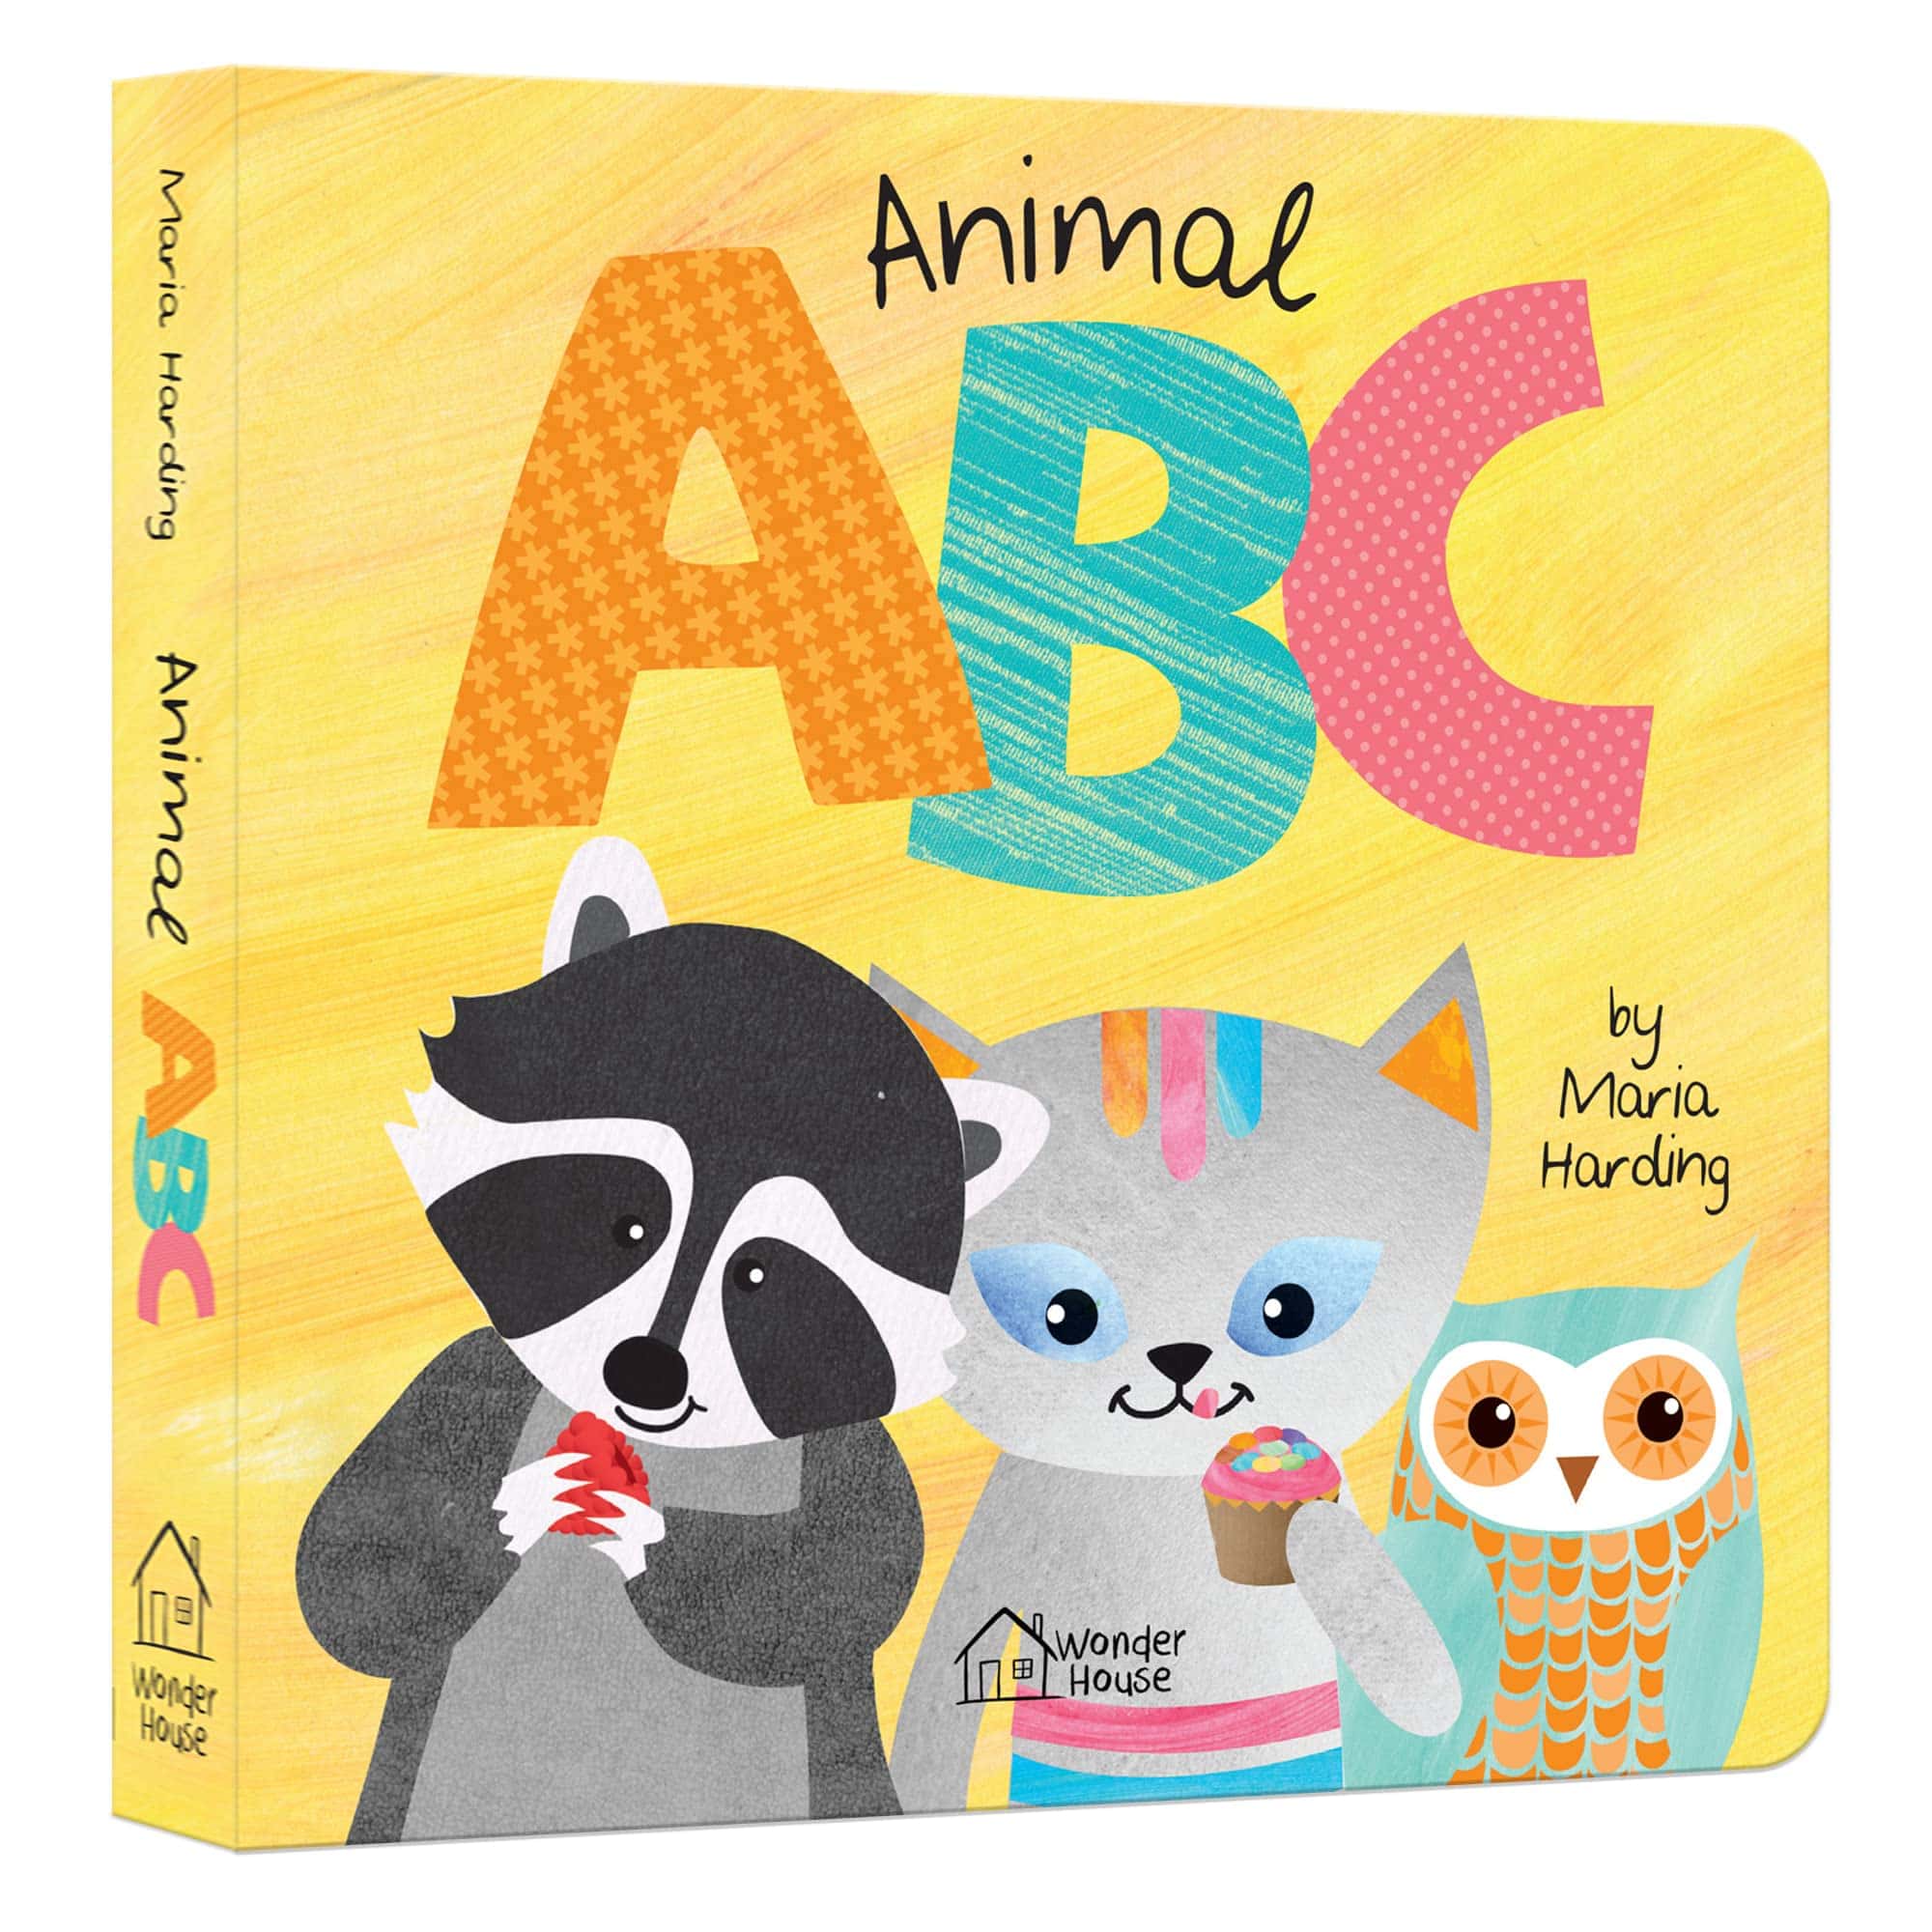 Animal ABC book cover